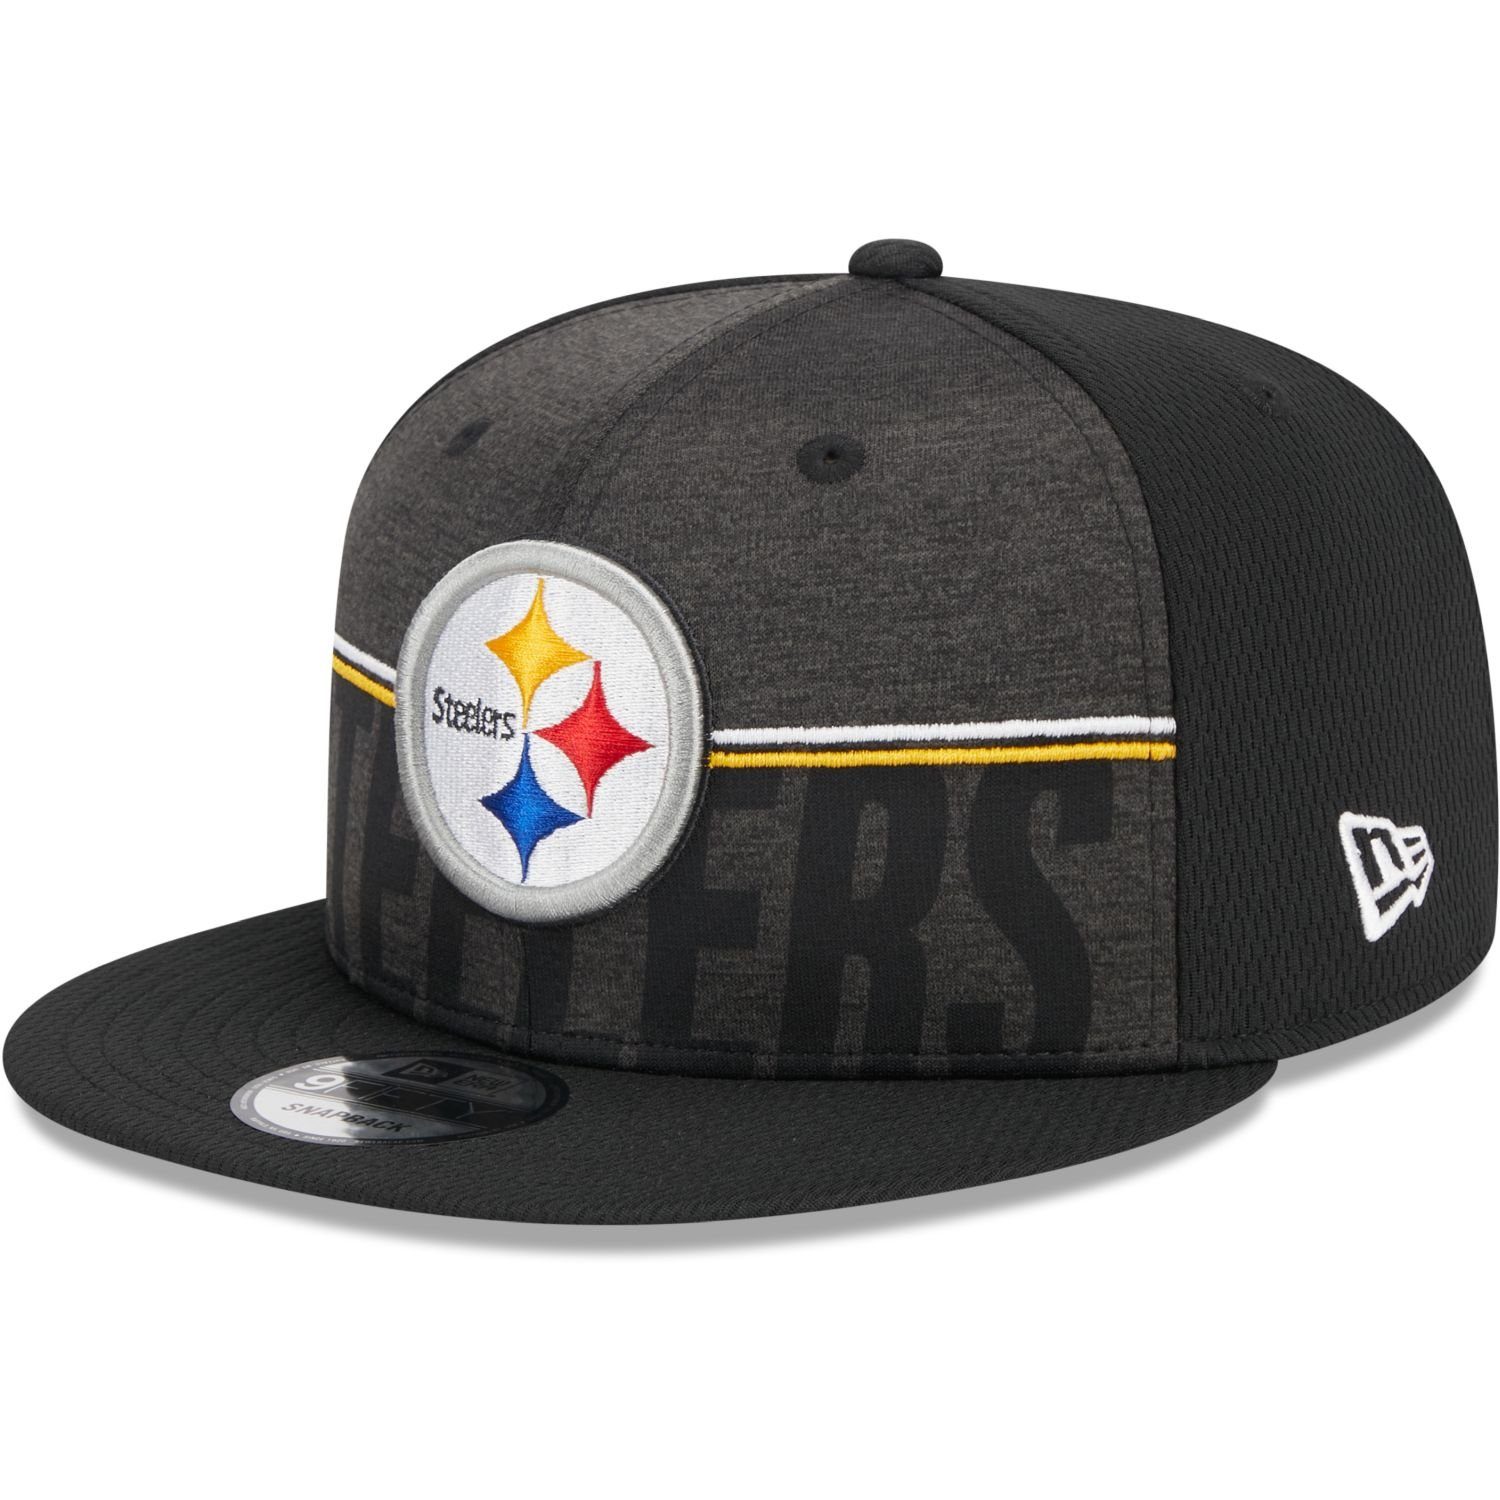 New Era Snapback Cap Steelers TRAINING 9FIFTY Pittsburgh